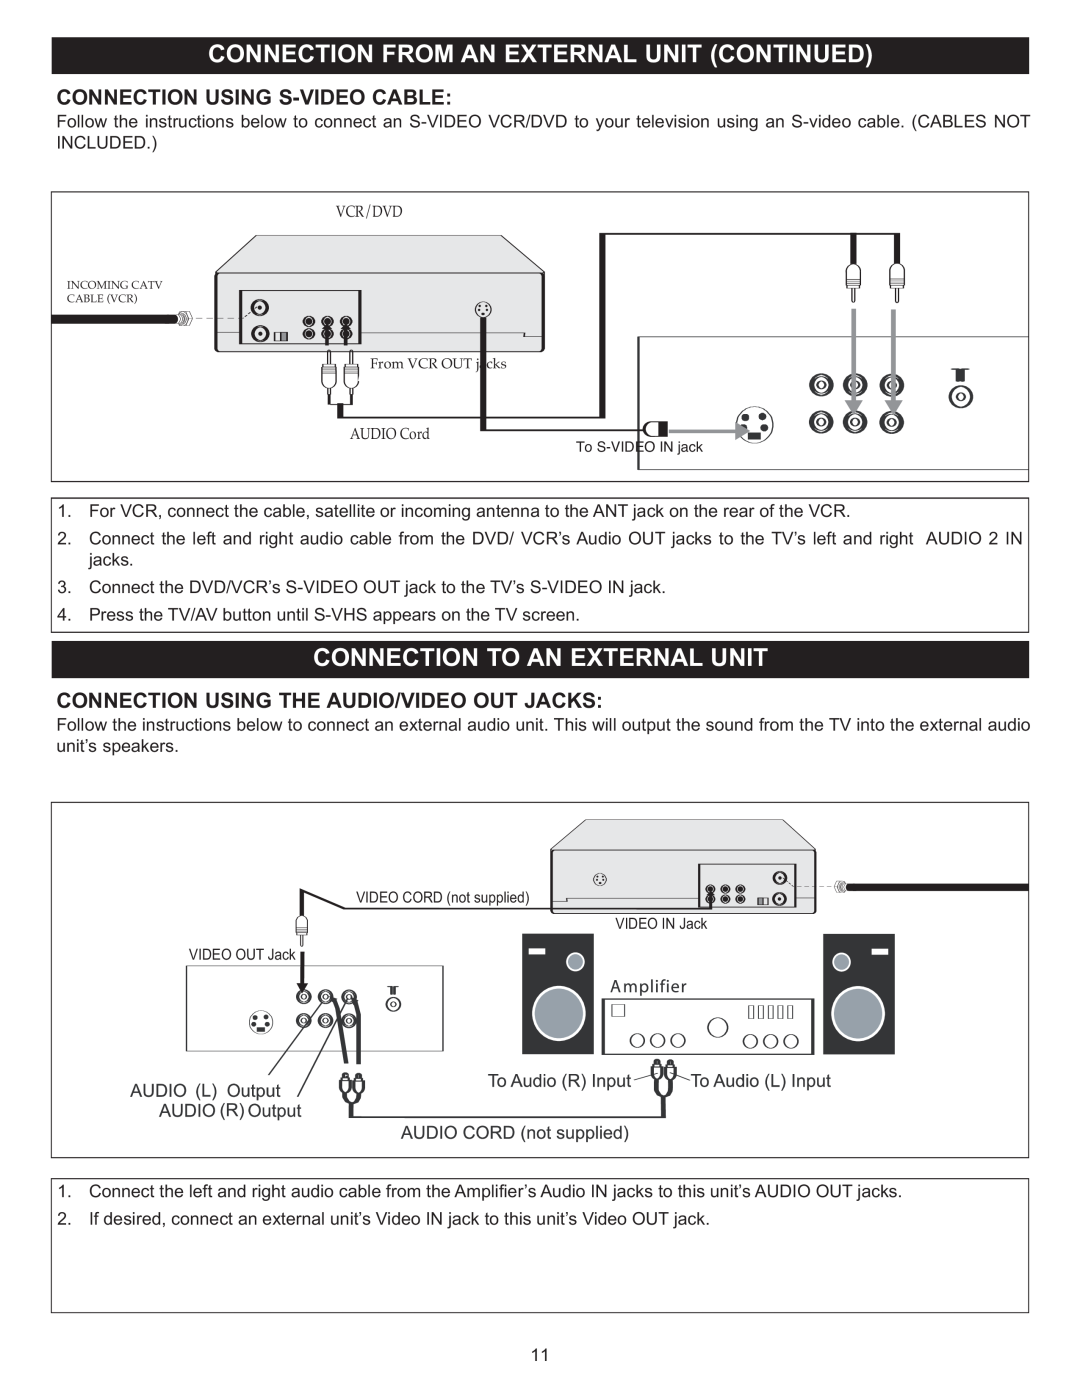 Memorex MT2024 manual Connection Using S-Video Cable, Connection Using The Audio/Video Out Jacks 